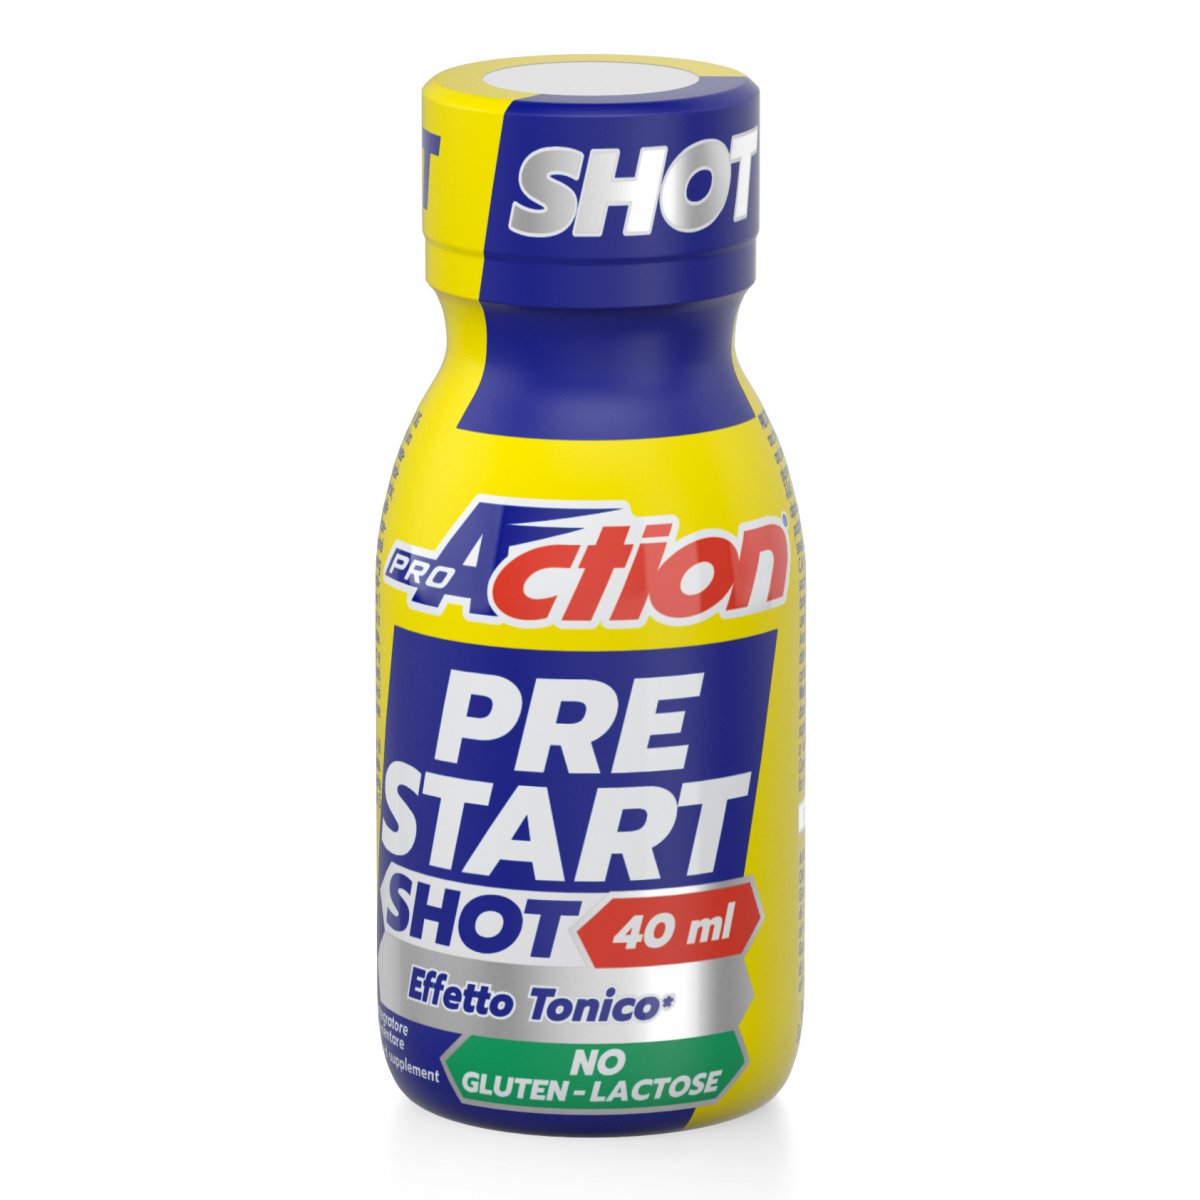 ProAction PRE START SHOT - Flacone 40 ml.  